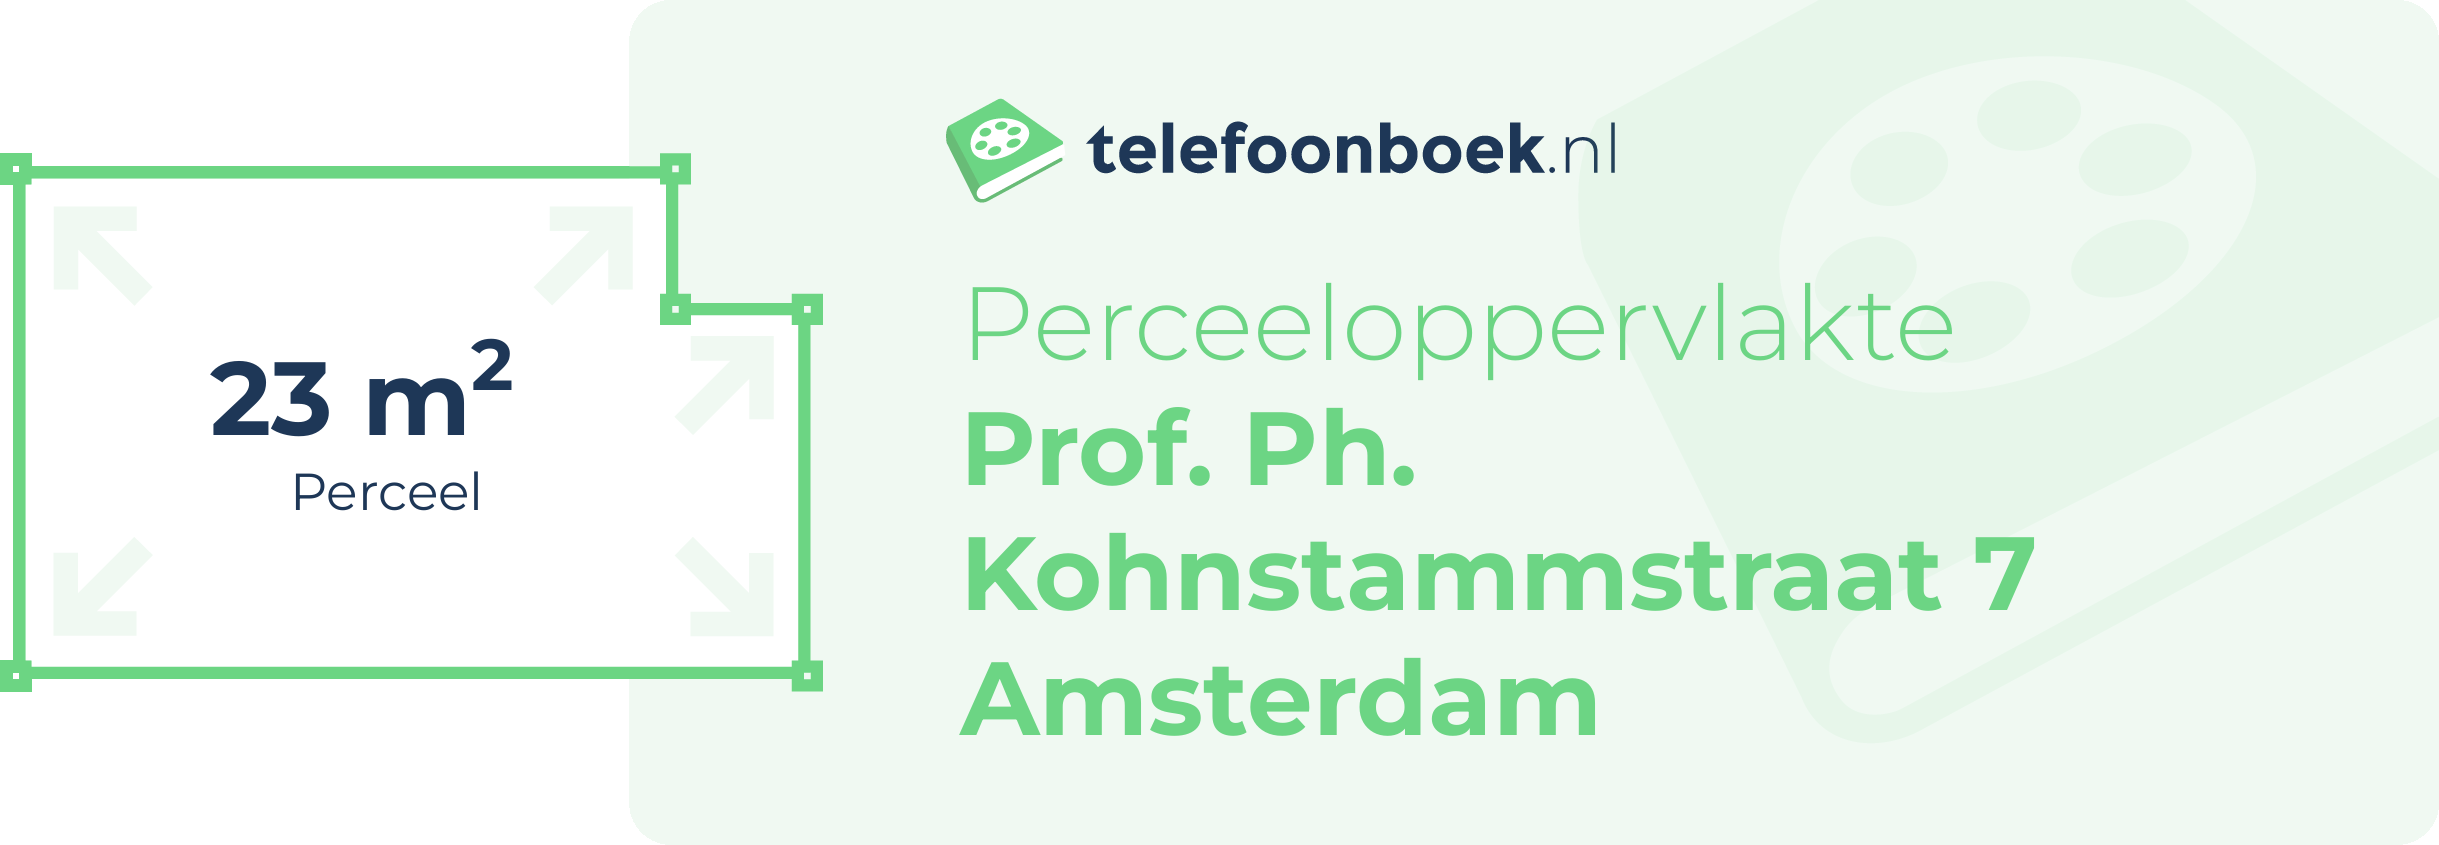 Perceeloppervlakte Prof. Ph. Kohnstammstraat 7 Amsterdam